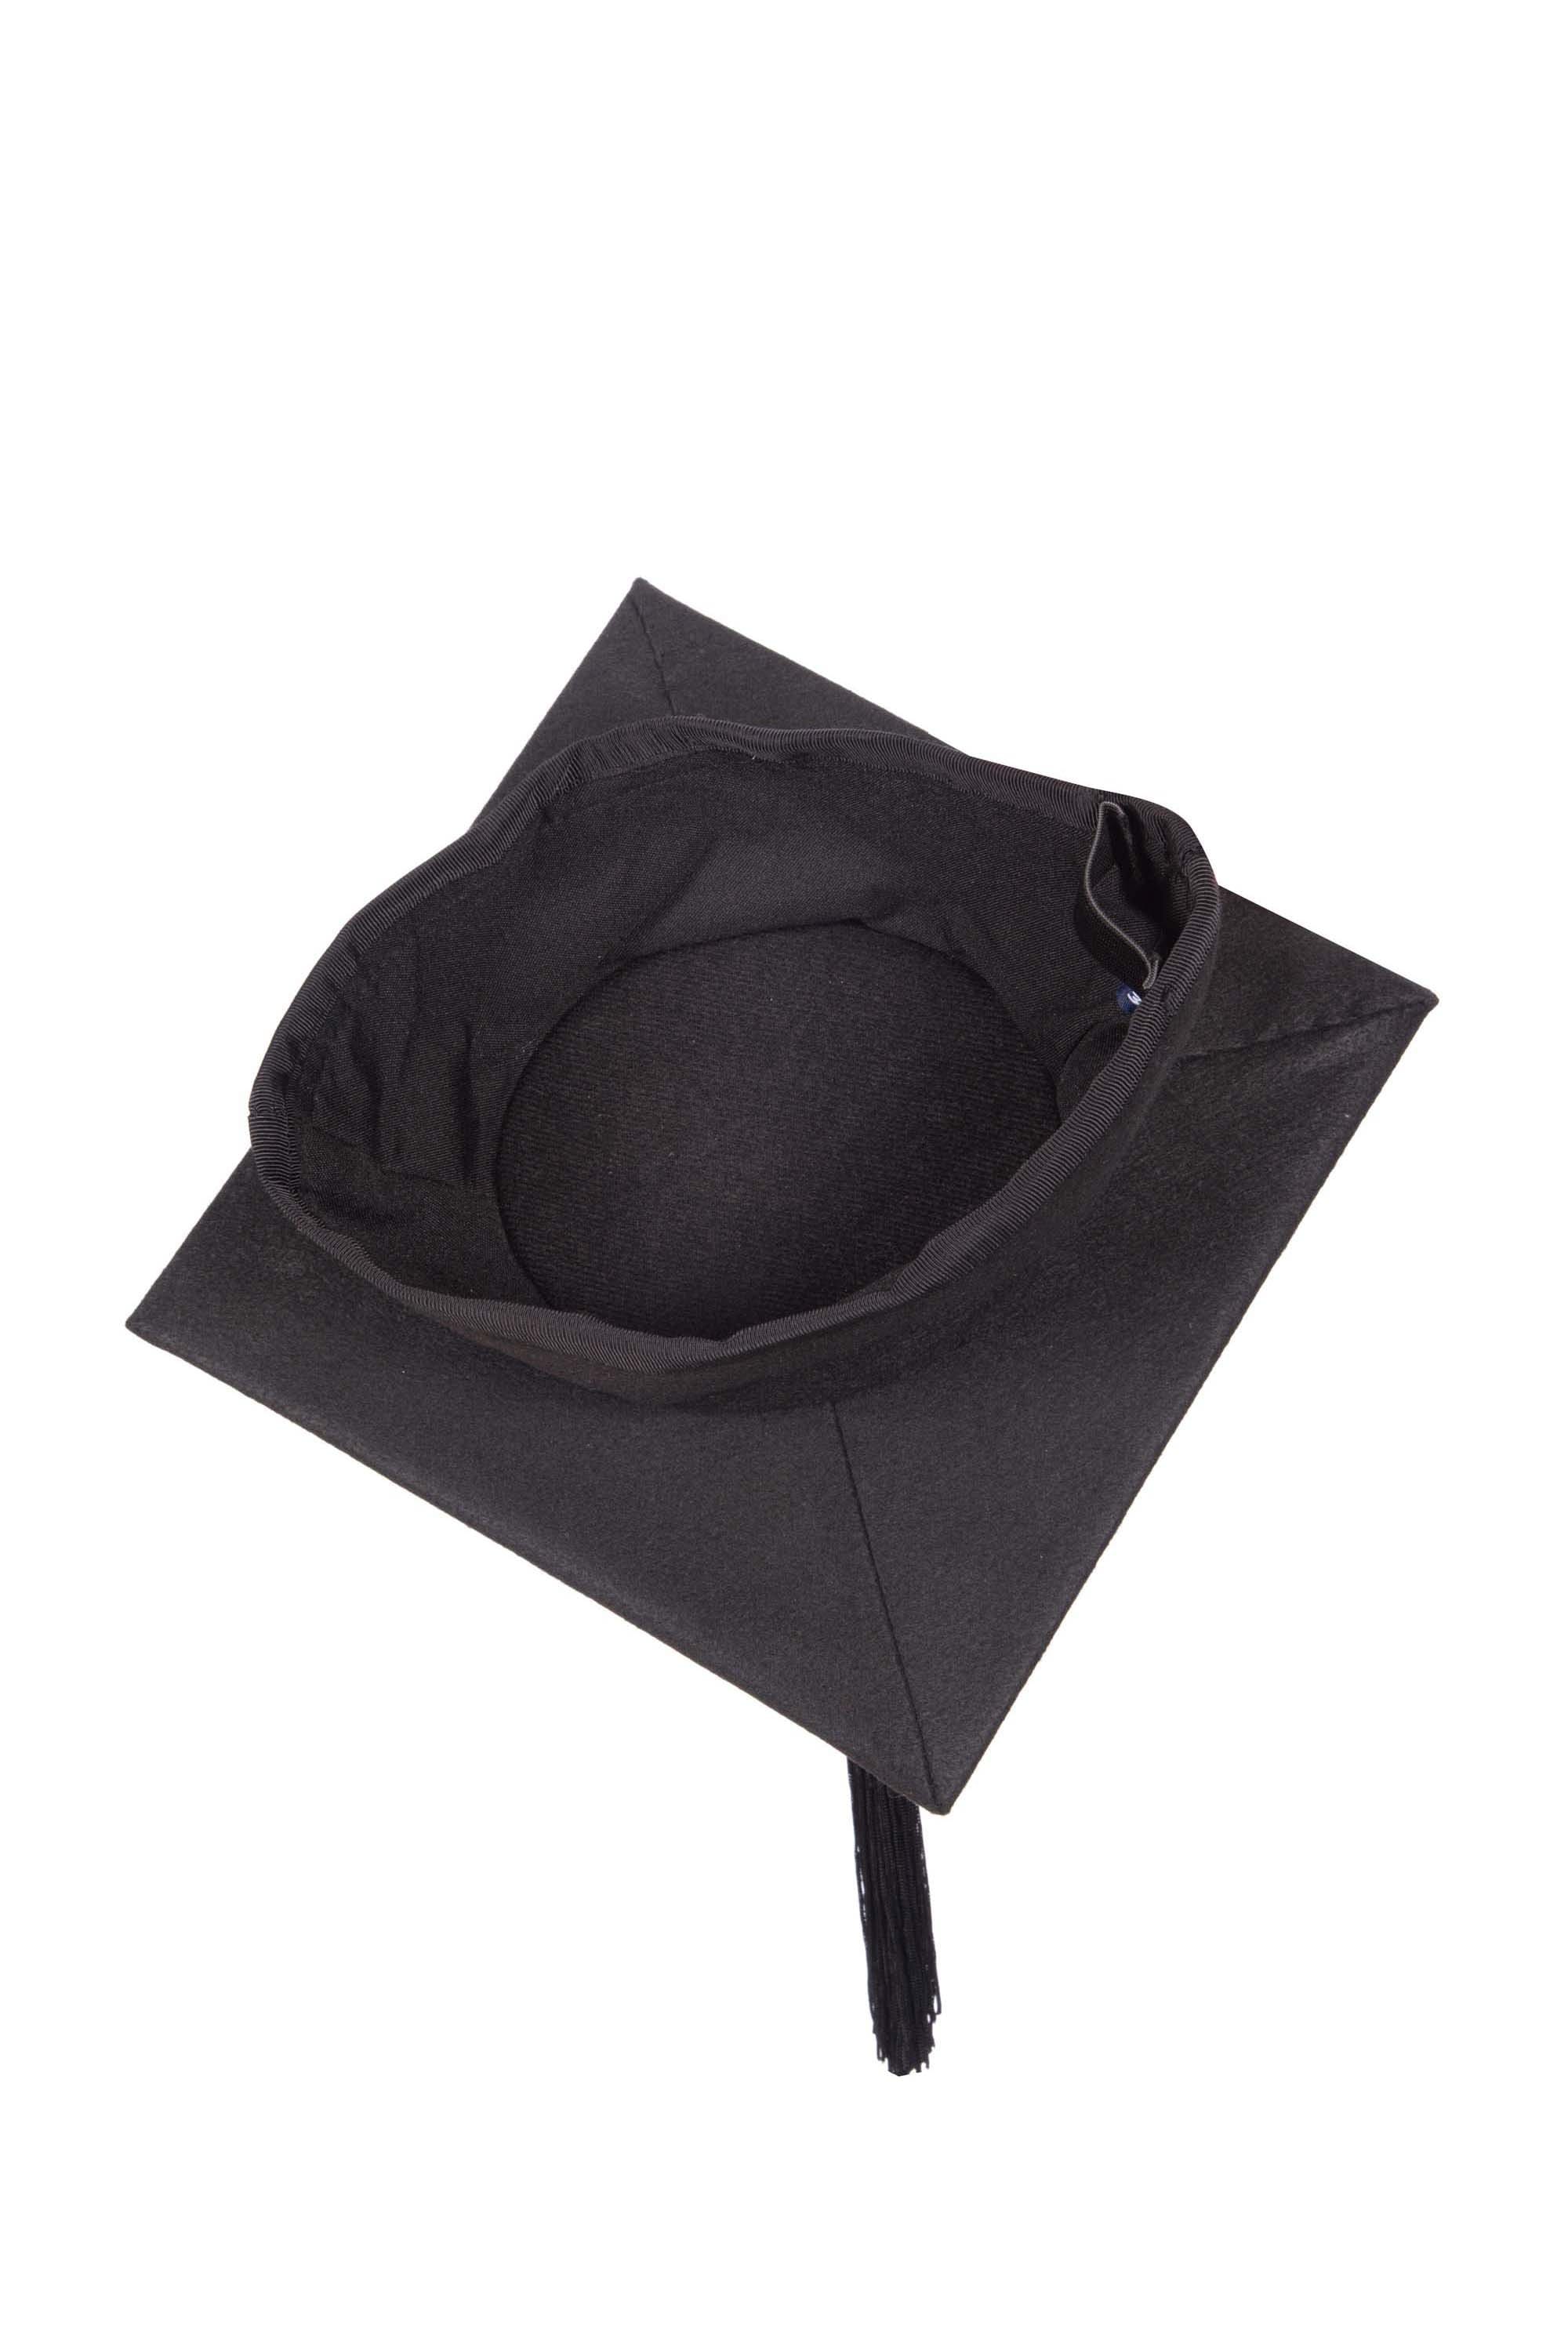 University of Northampton | Felt Mortarboard: Hat Throw Essential